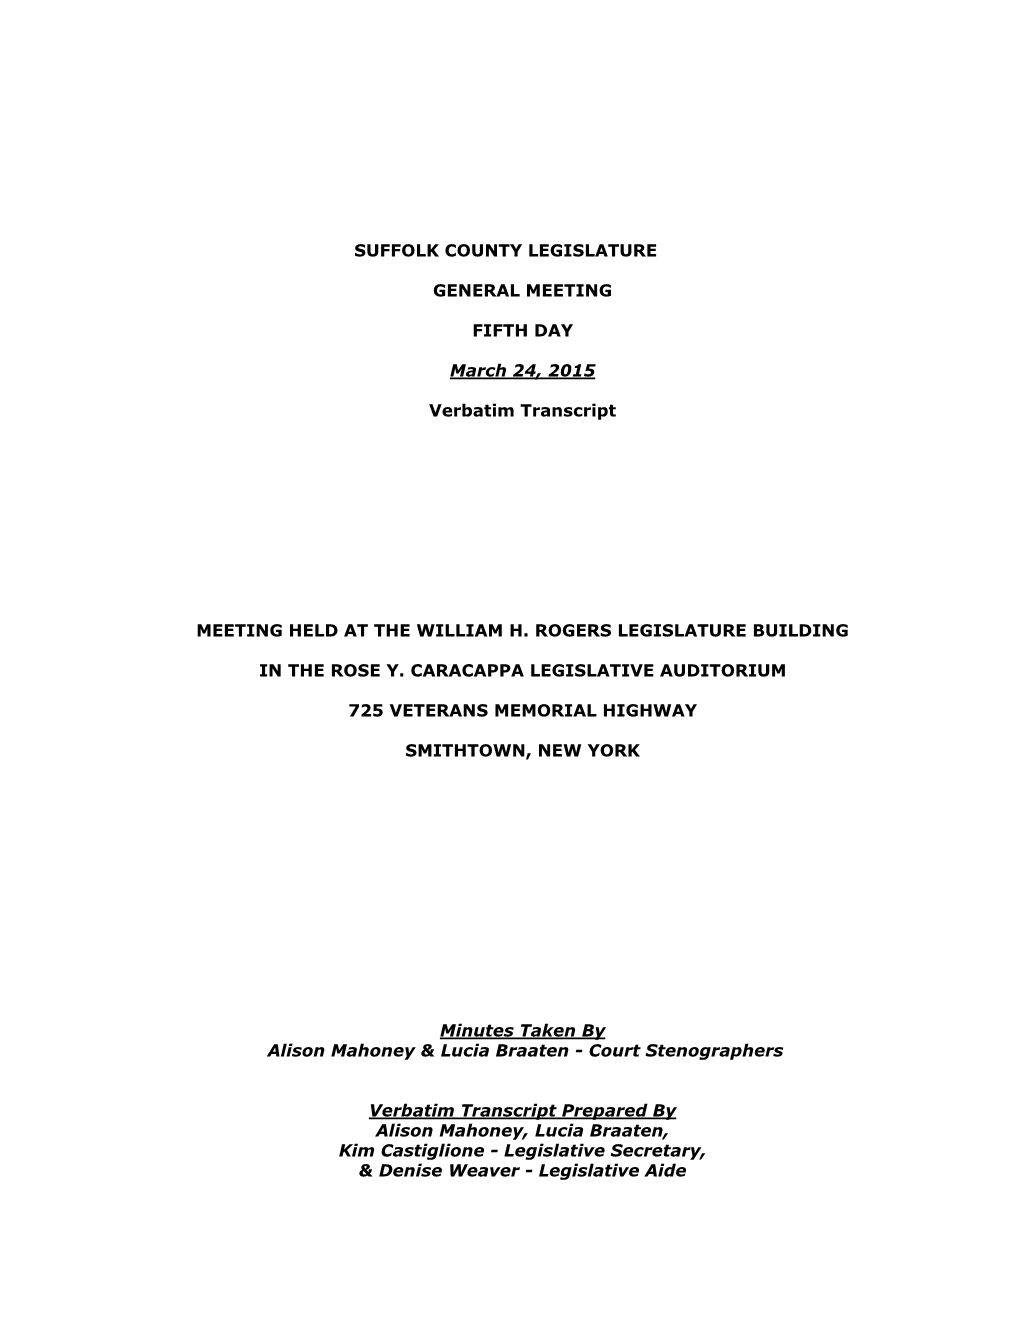 03/24/2015 General Meeting Minutes (PDF)